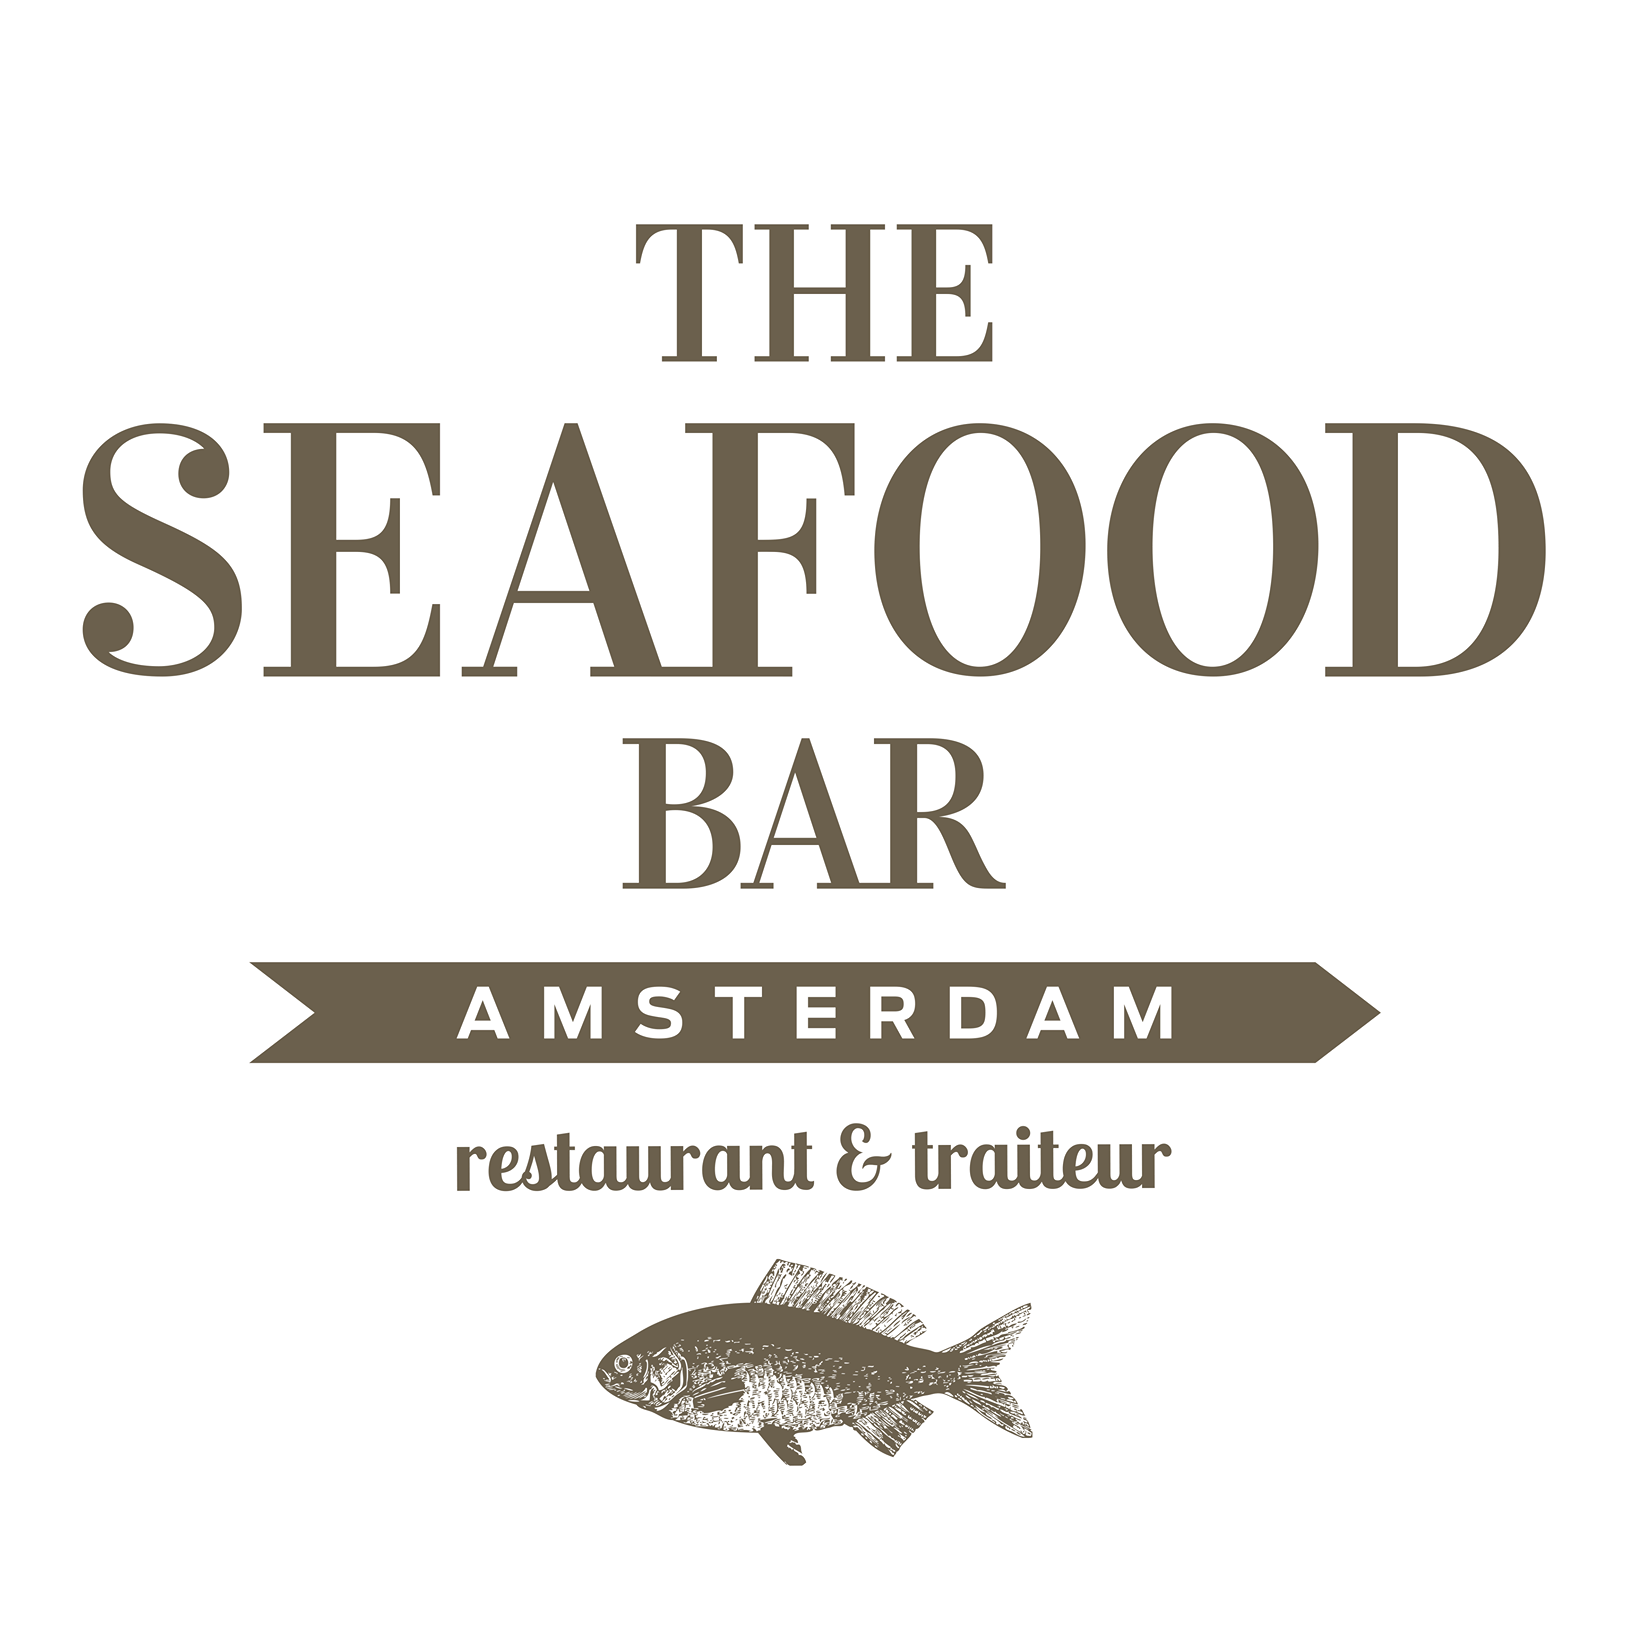 The Seafood Bar logo